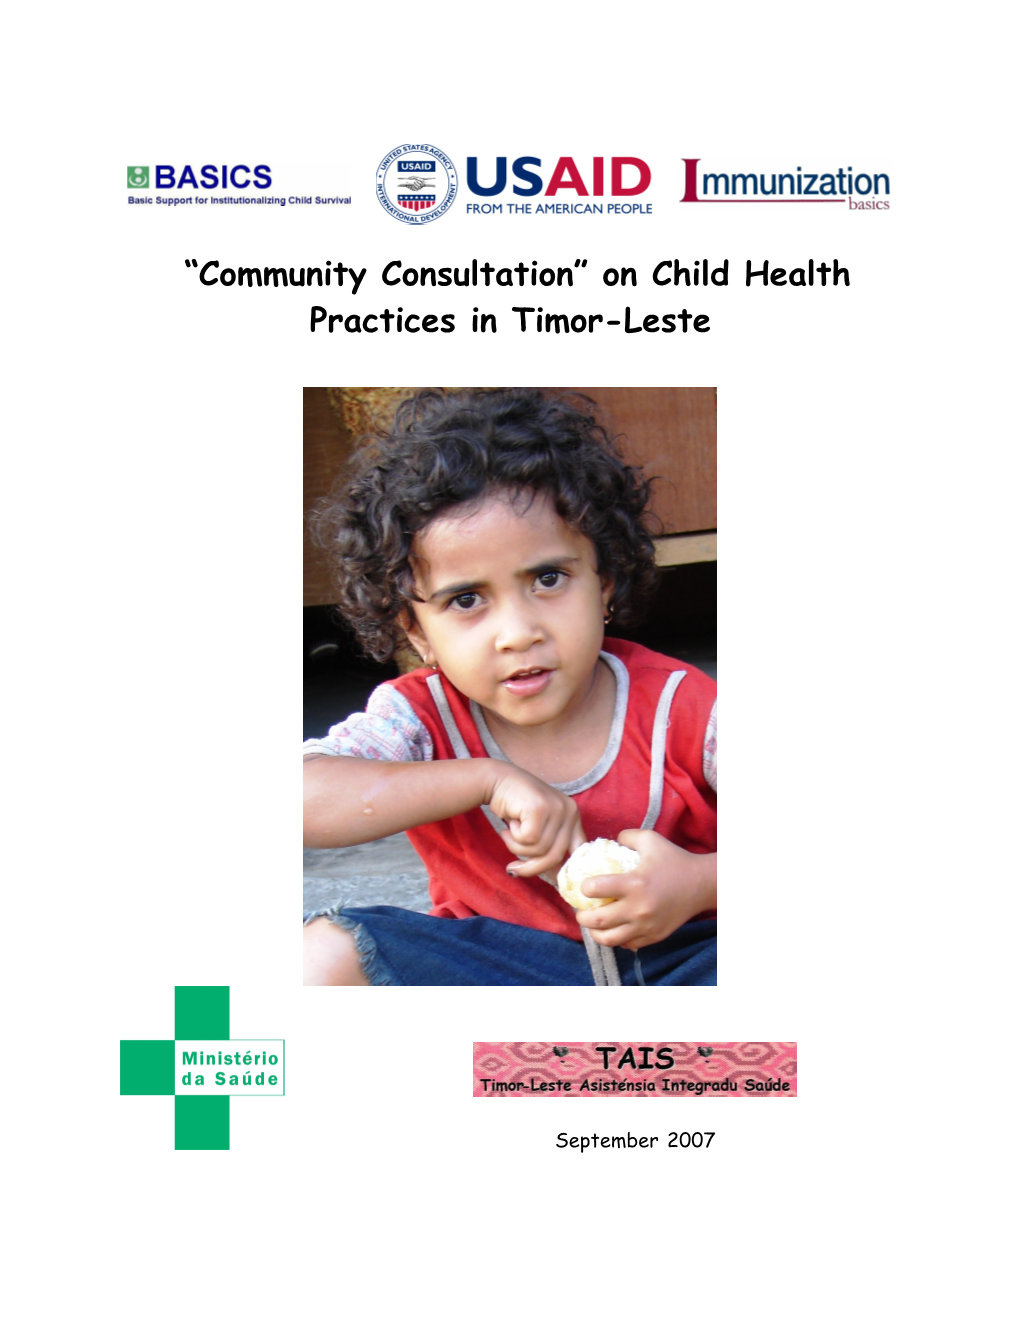 Community Consultation on Child Health Practices in Timor-Leste